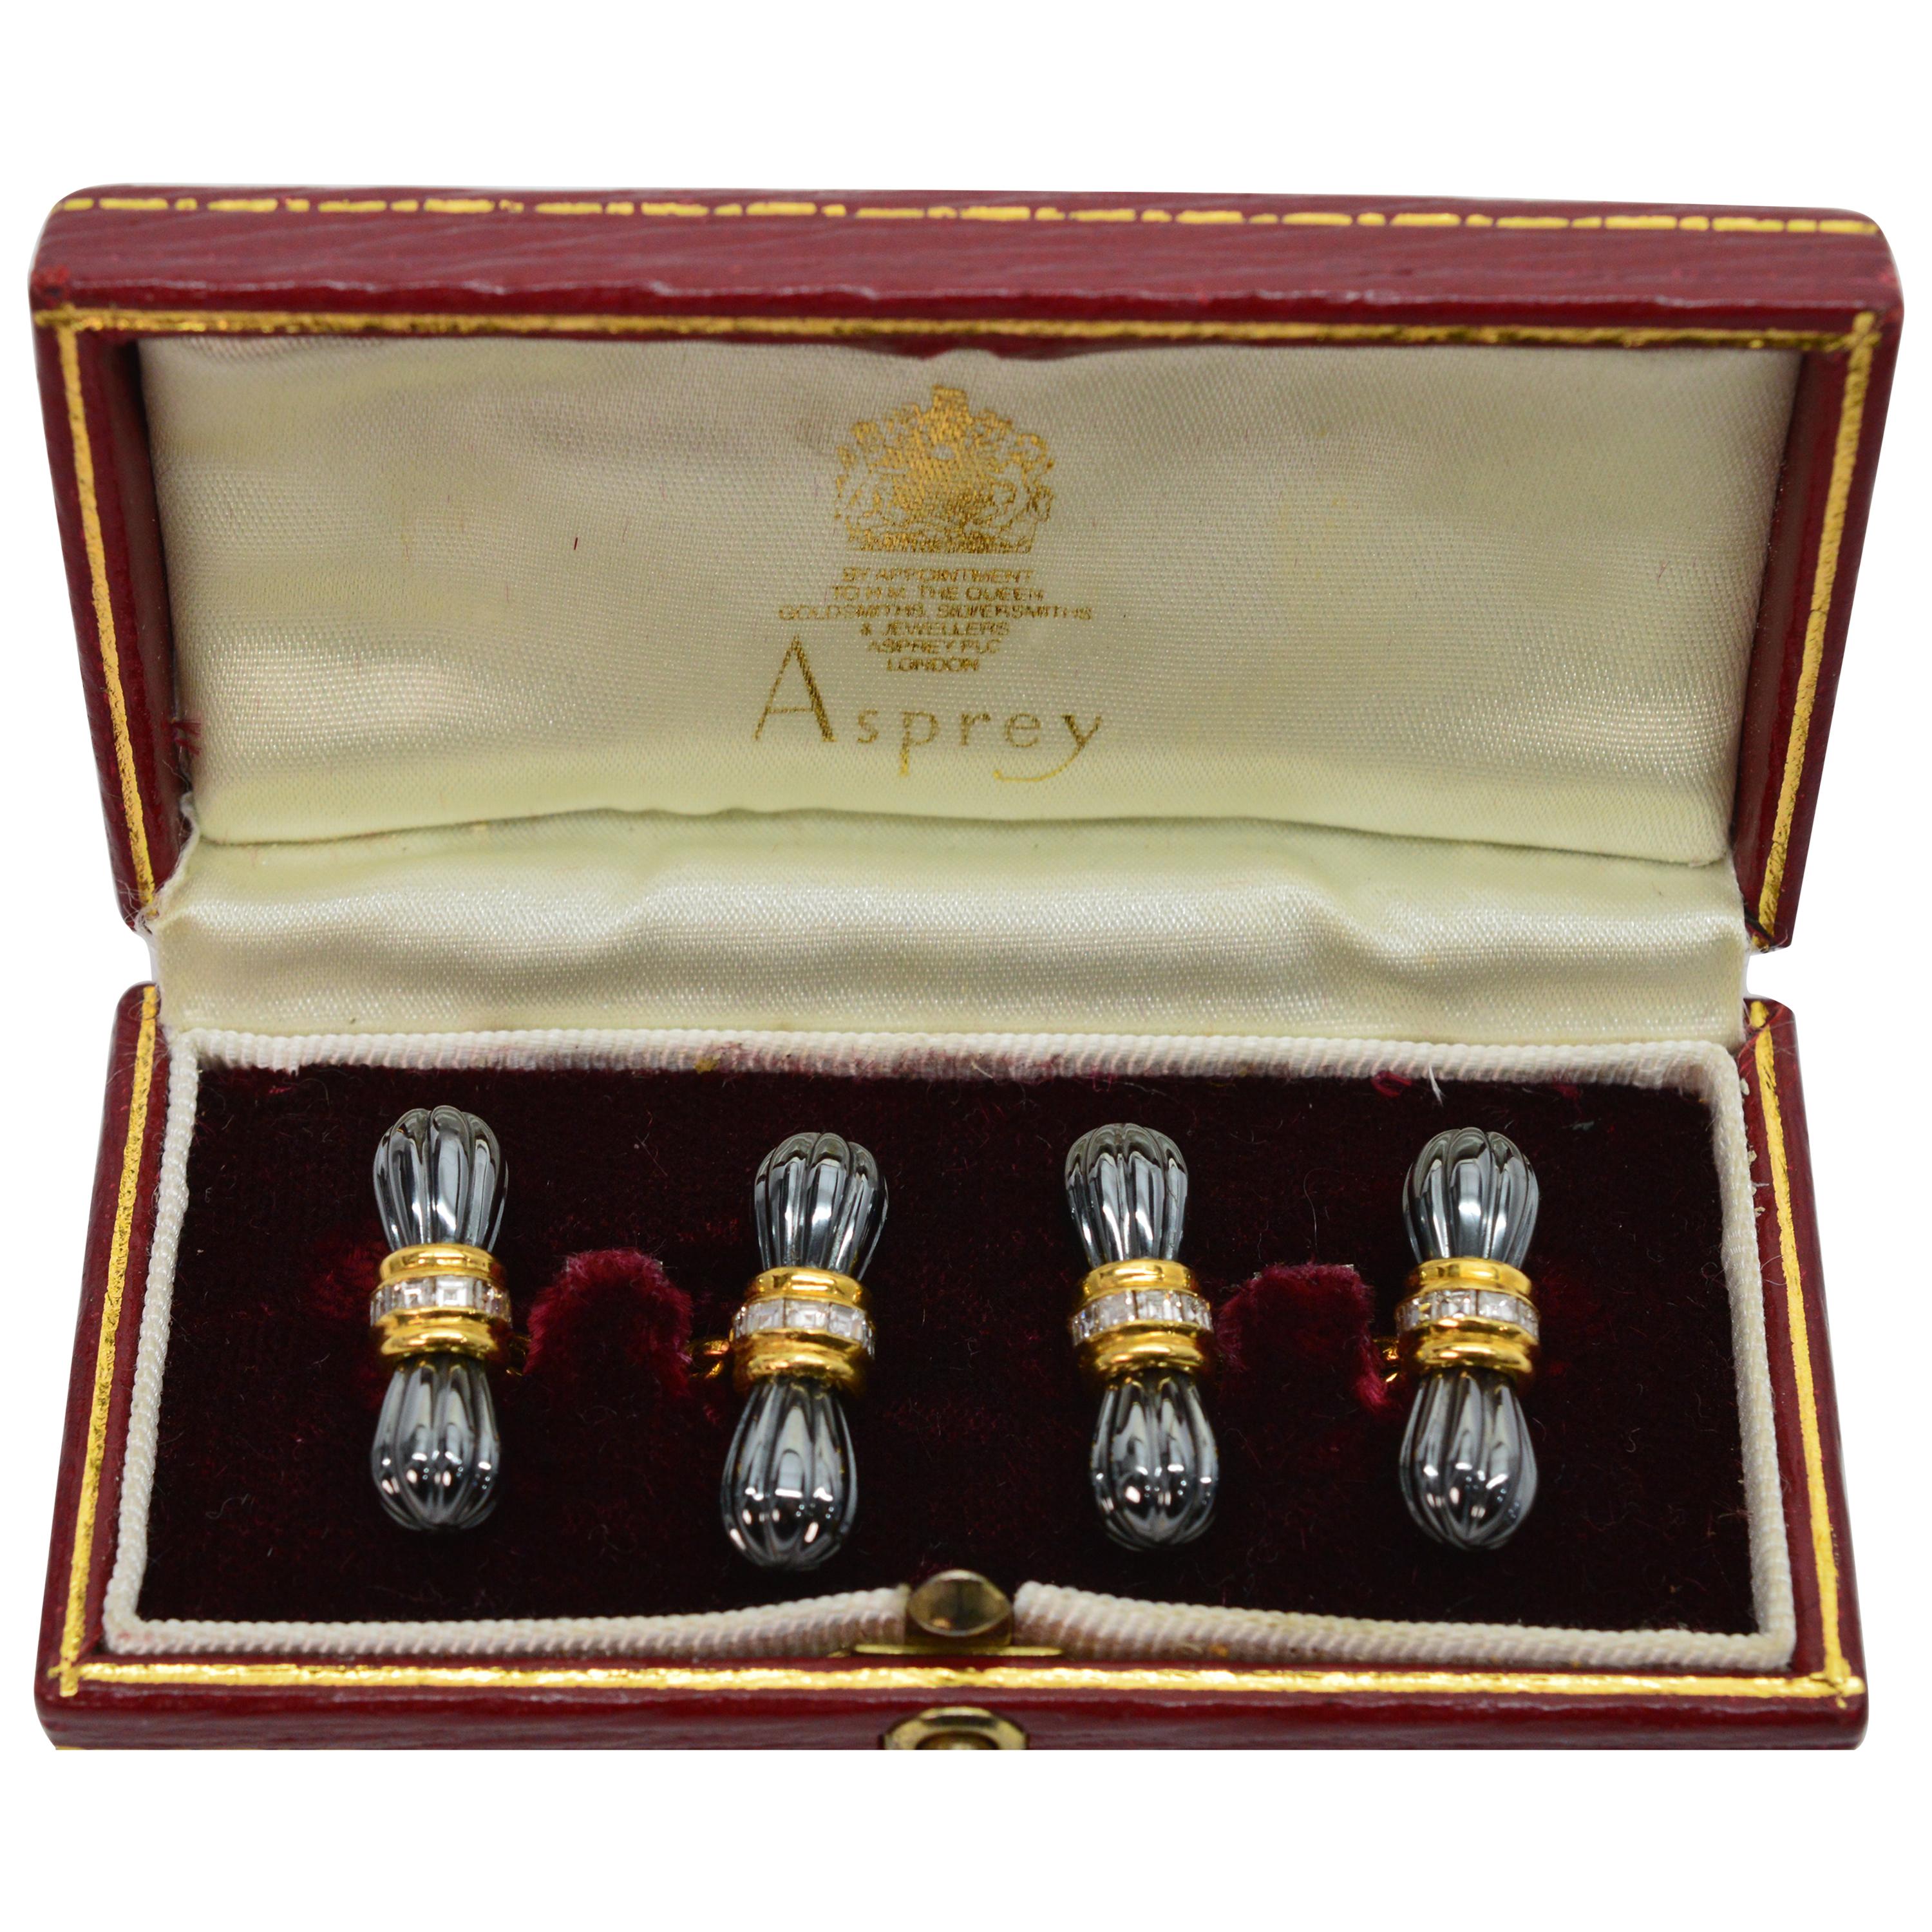 Asprey of London Cufflinks in Original Box